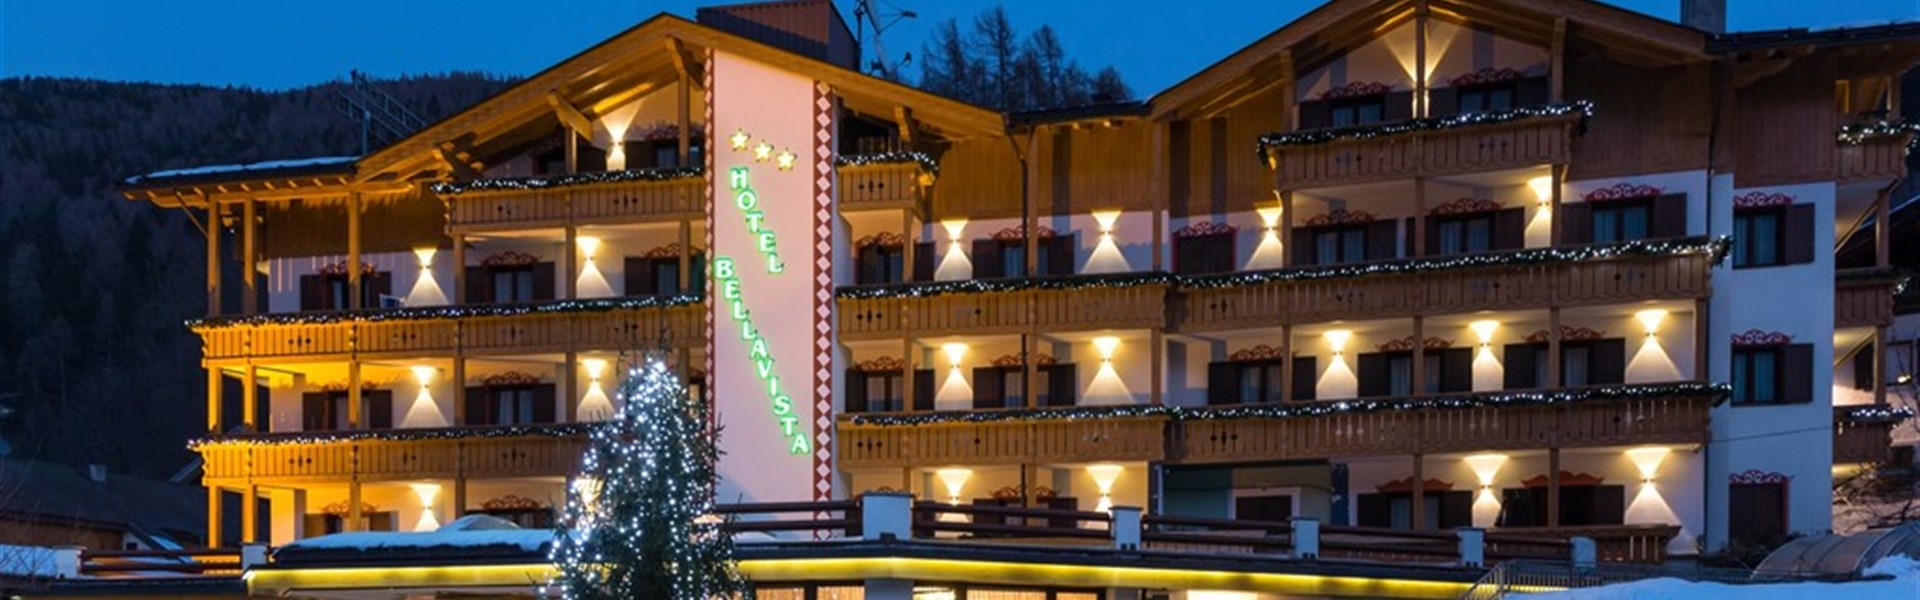 Hotel Bellavista - 